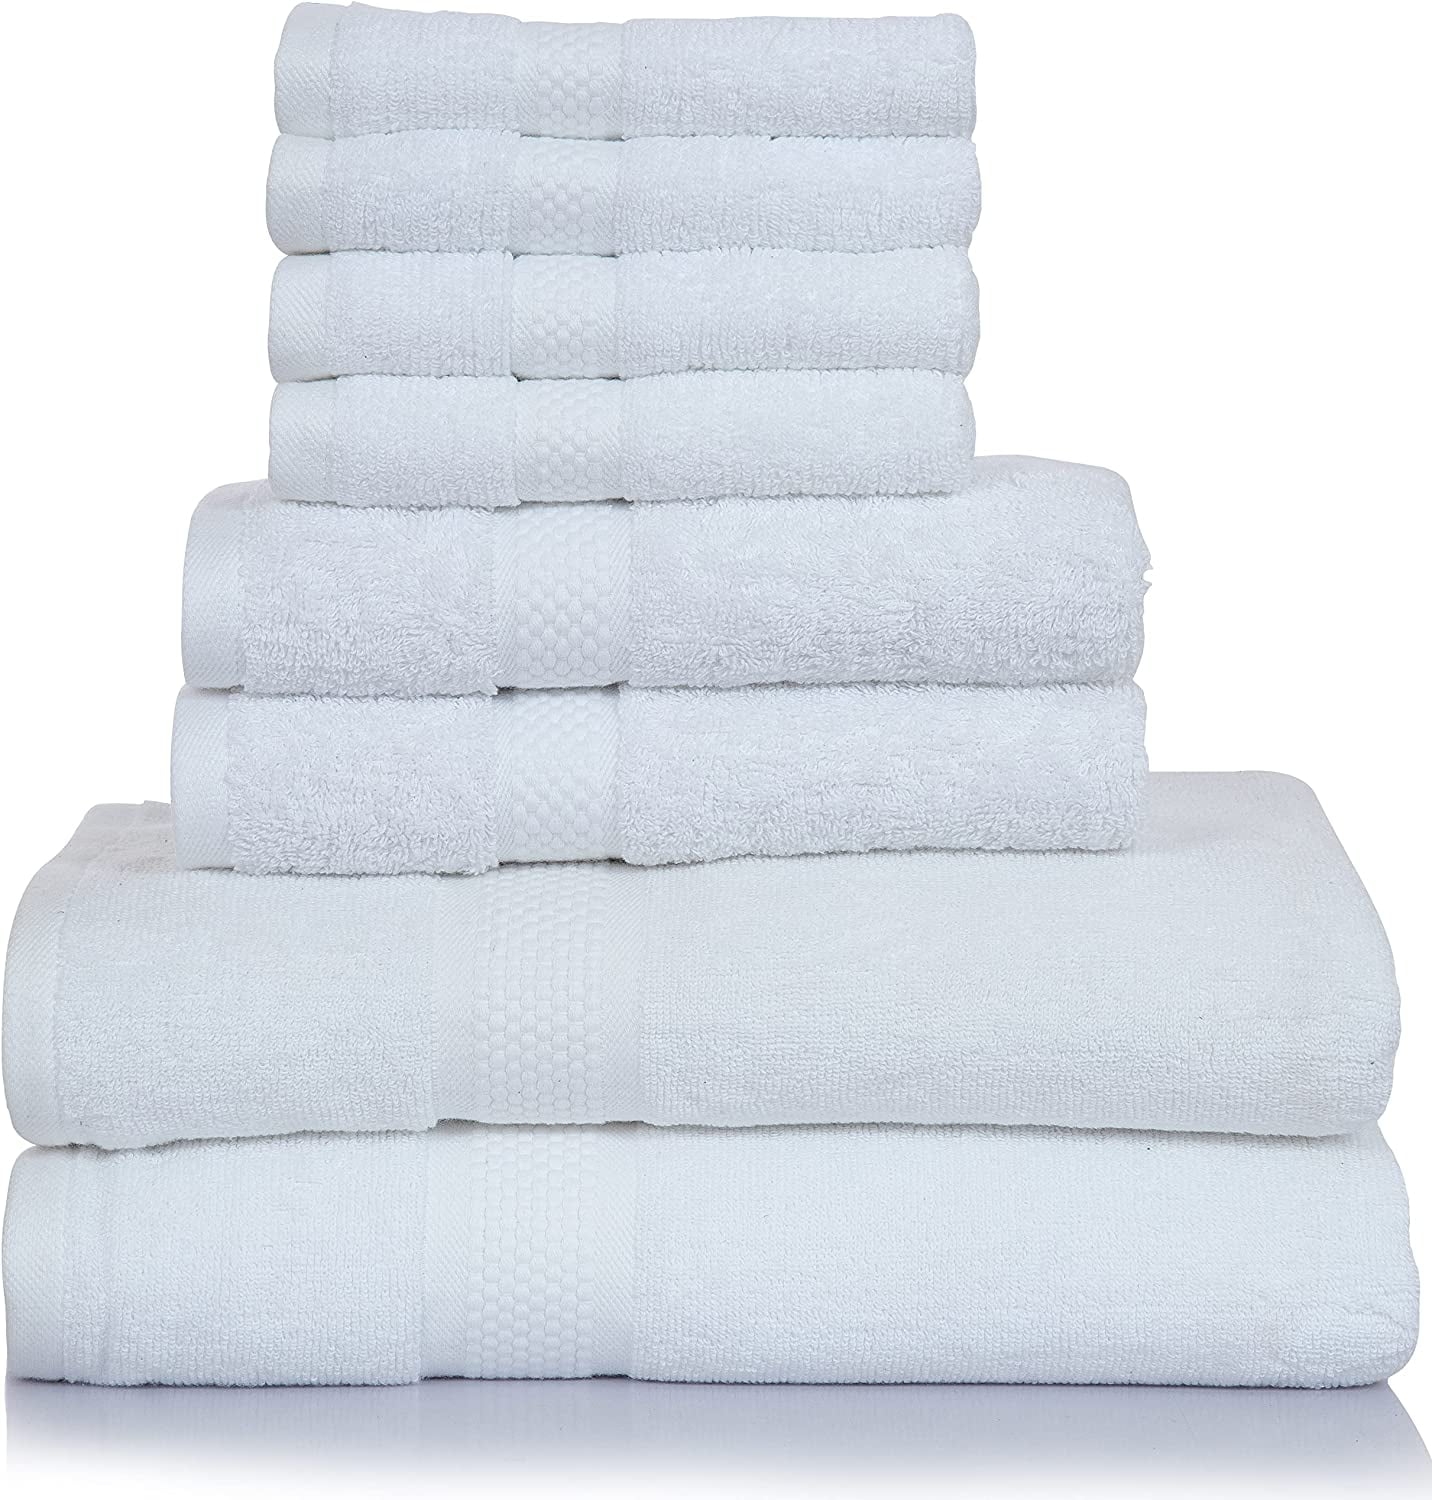 600 GSM Diplomat Combed Cotton 6 pc Bath Towel Set